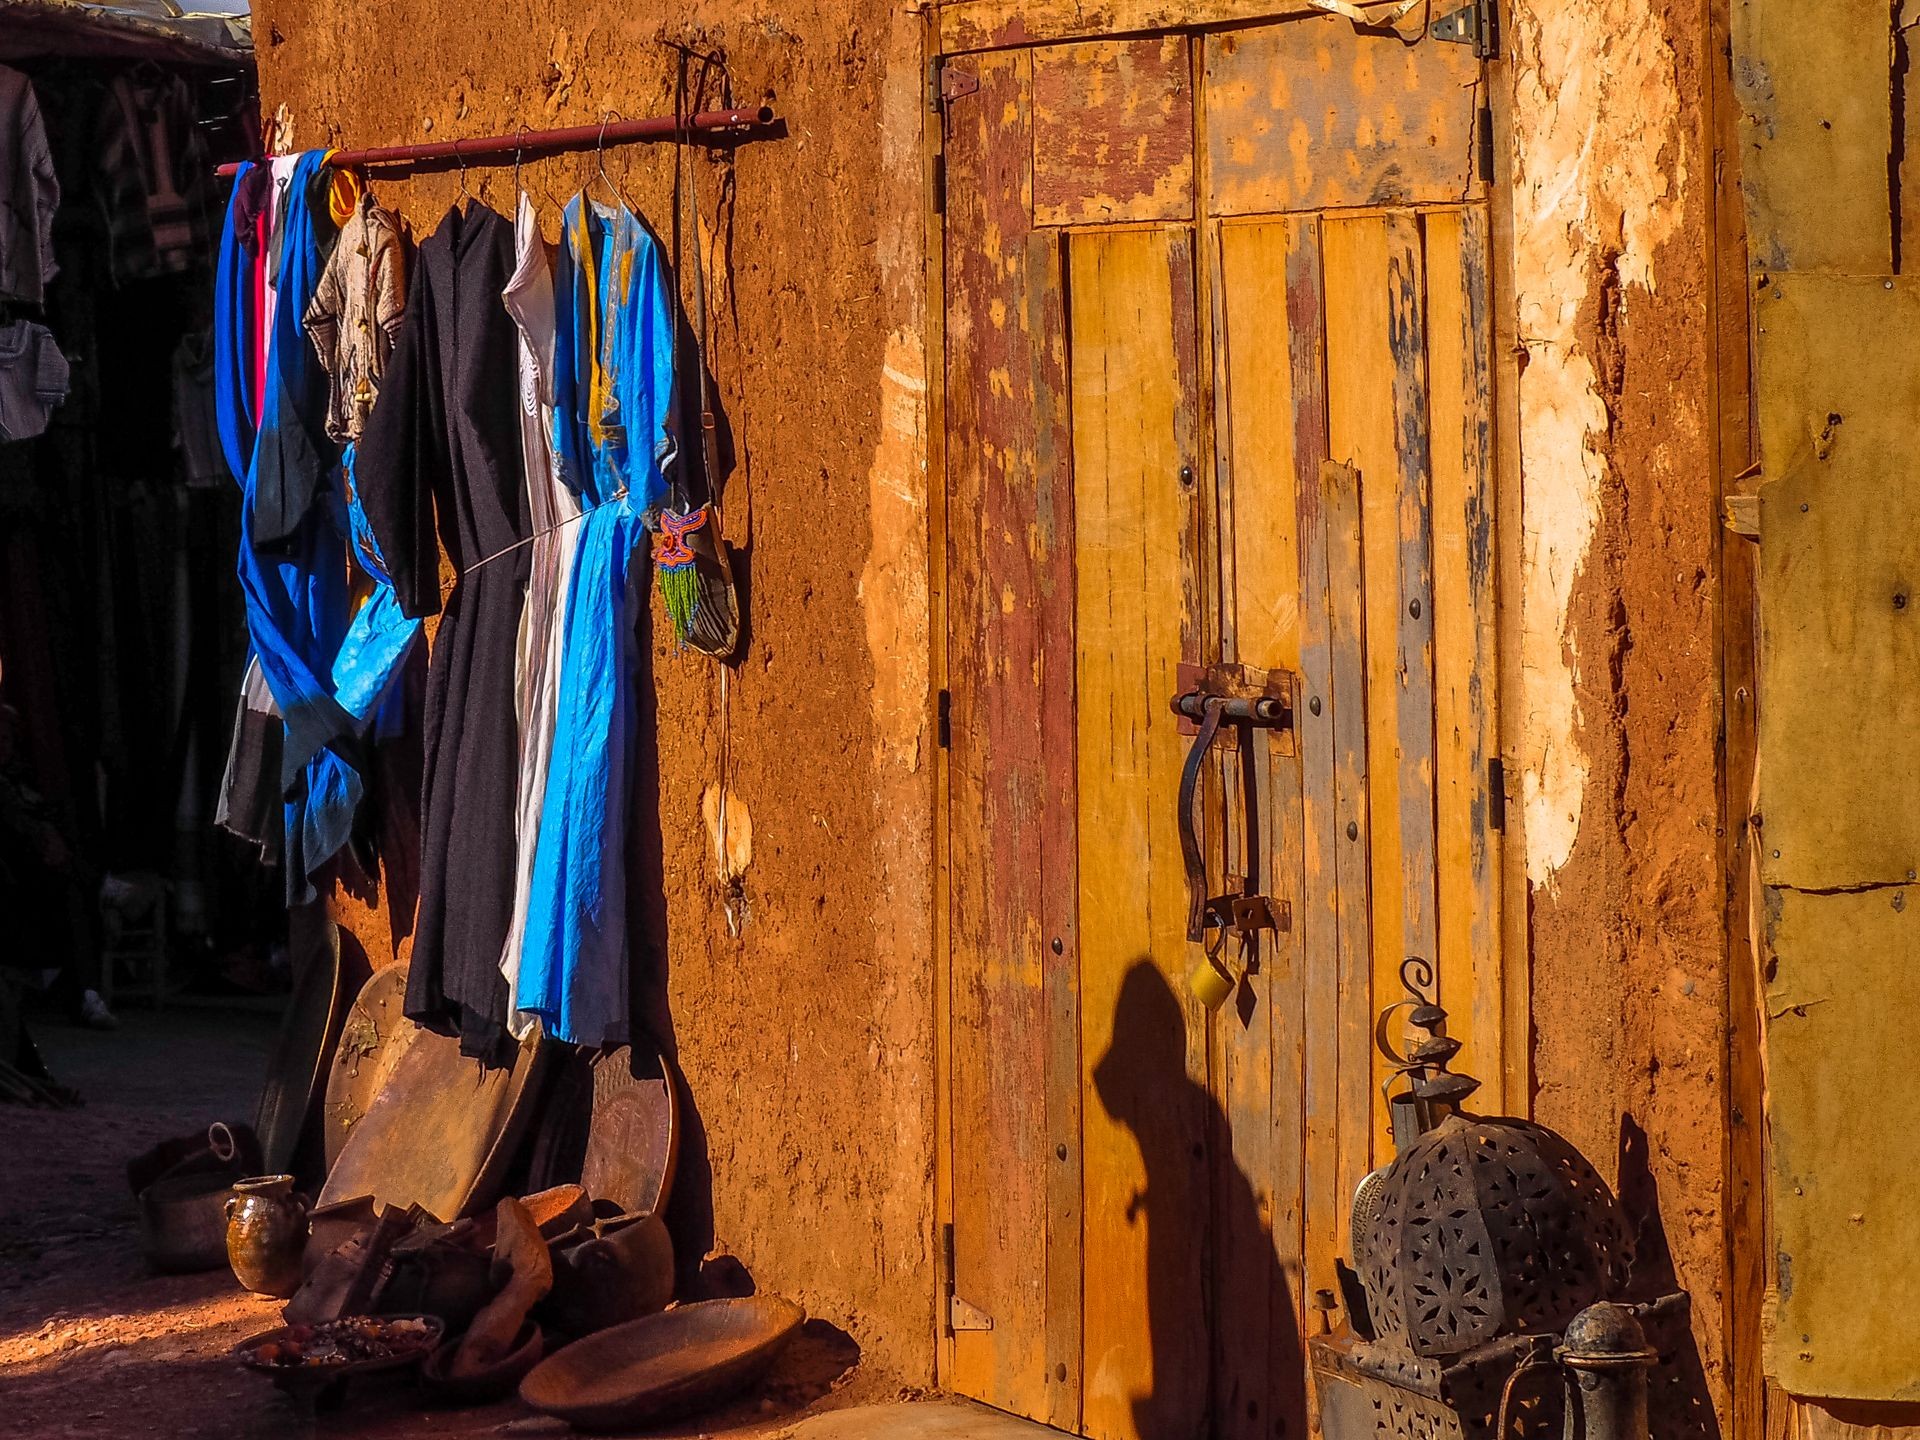 back alley scene in Ait BenHaddou Morocco